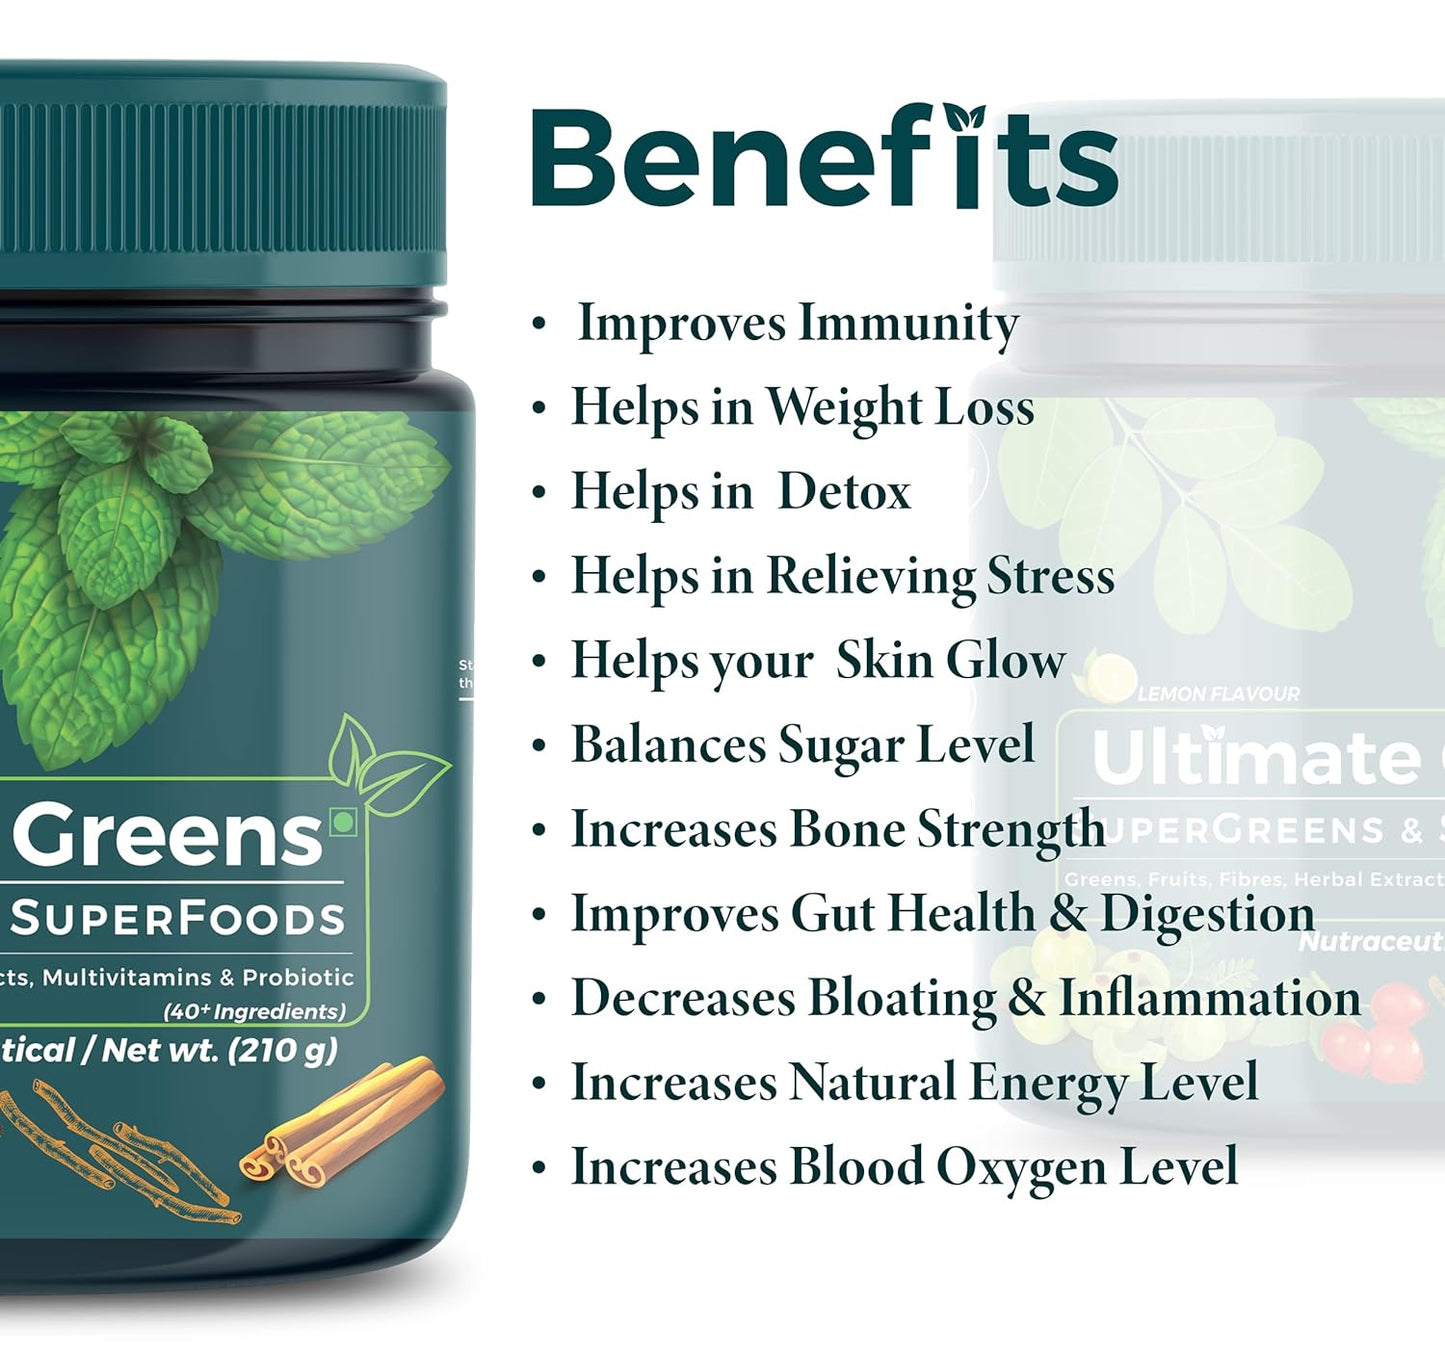 Ultimate Greens Vitamin Supplements enhances Digestion, Immunity(210gms)-Green juice mix , 40+ ingredients like ashwagandha, spirulina, moringa, amla, spinach, fruits, fibers, herbs, multivitamins & probiotic blend-(30 serv)